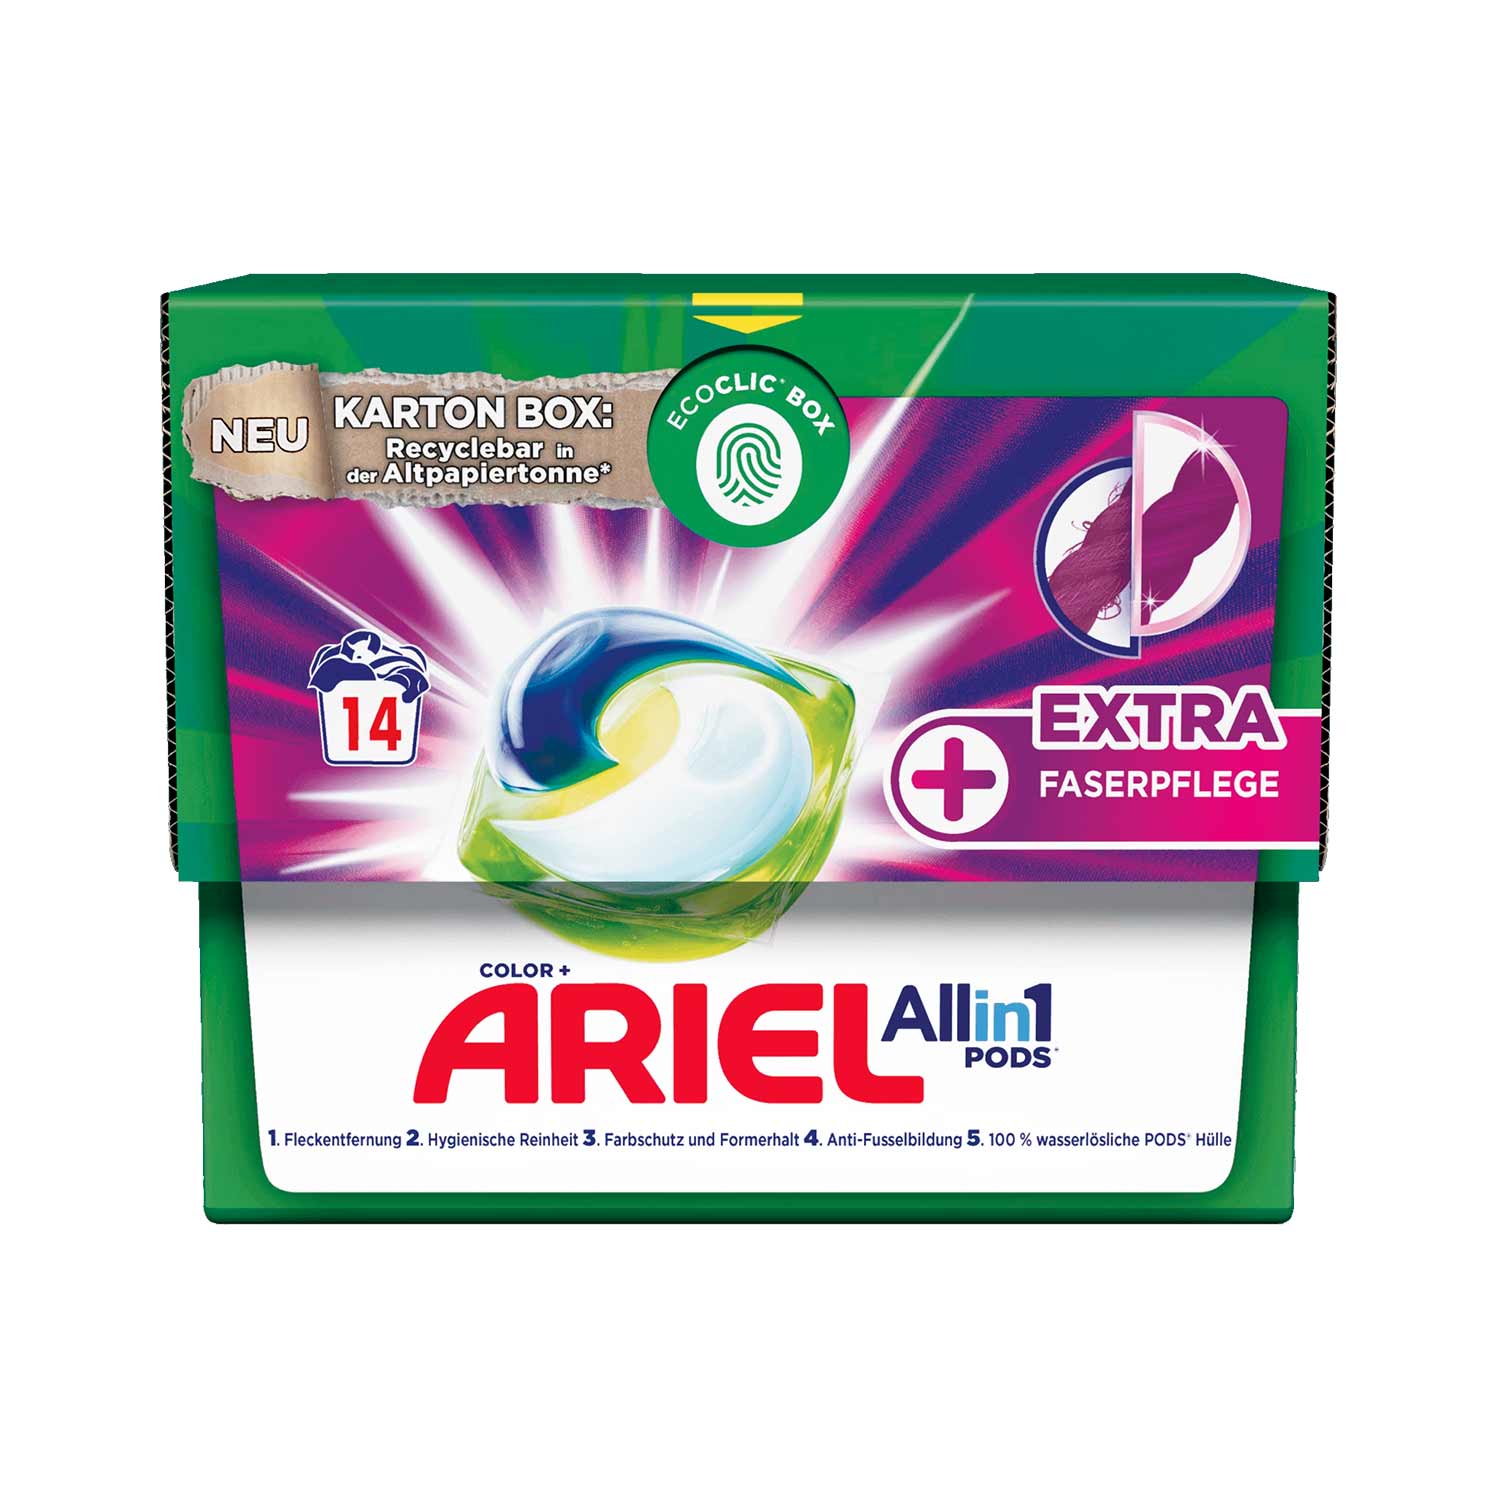 Ariel All-in-1 PODs Color mit extra Faserpflege in Karton-Box 14 WL